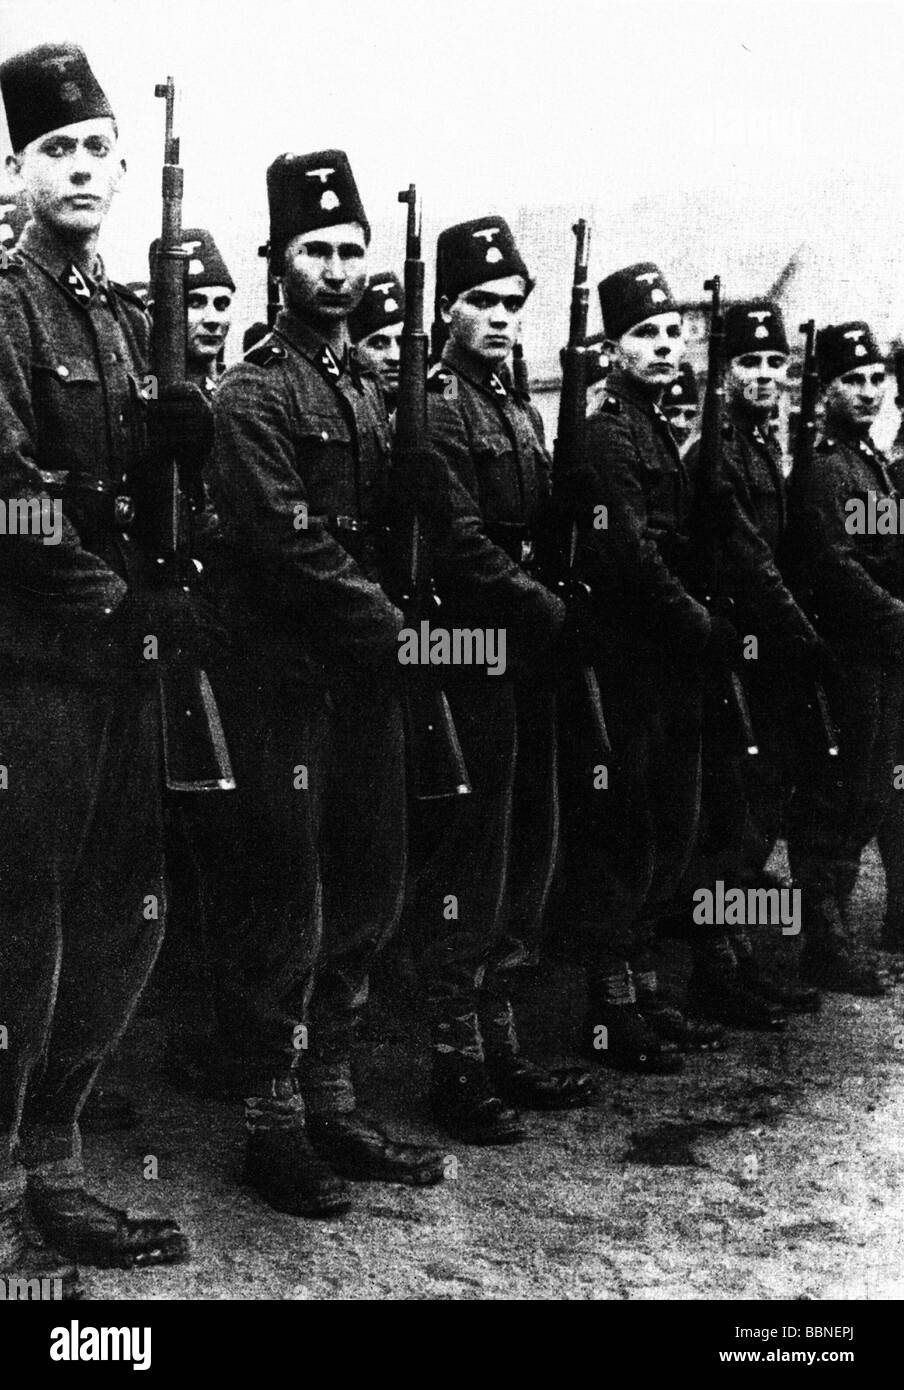 events, Second World War / WWII, foreigners in German service, Bosnians, 13th Waffen - Gebirgsdivision der SS 'Handschar' (1st Croatian), staff company formed up, propaganda photo, circa 1943, Stock Photo